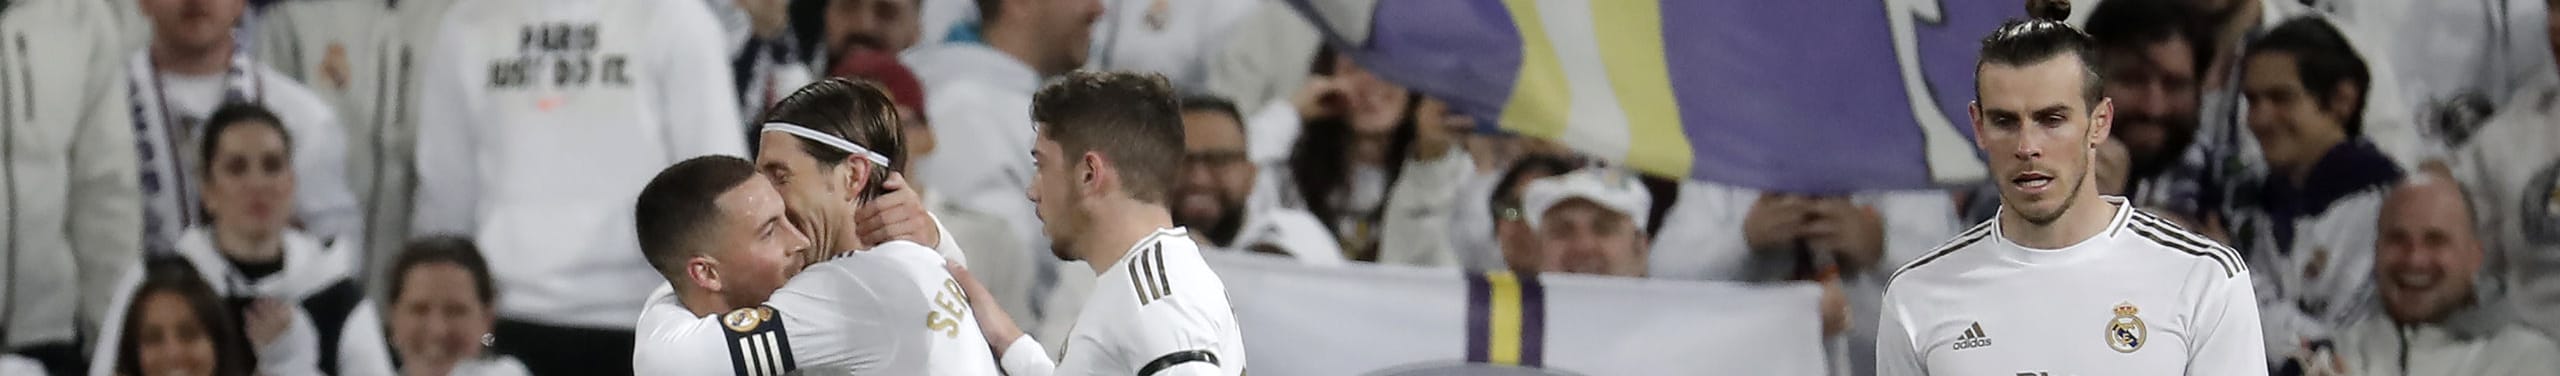 Levante-Real Madrid, i blancos cercano lo slancio in vista di Champions e Clásico